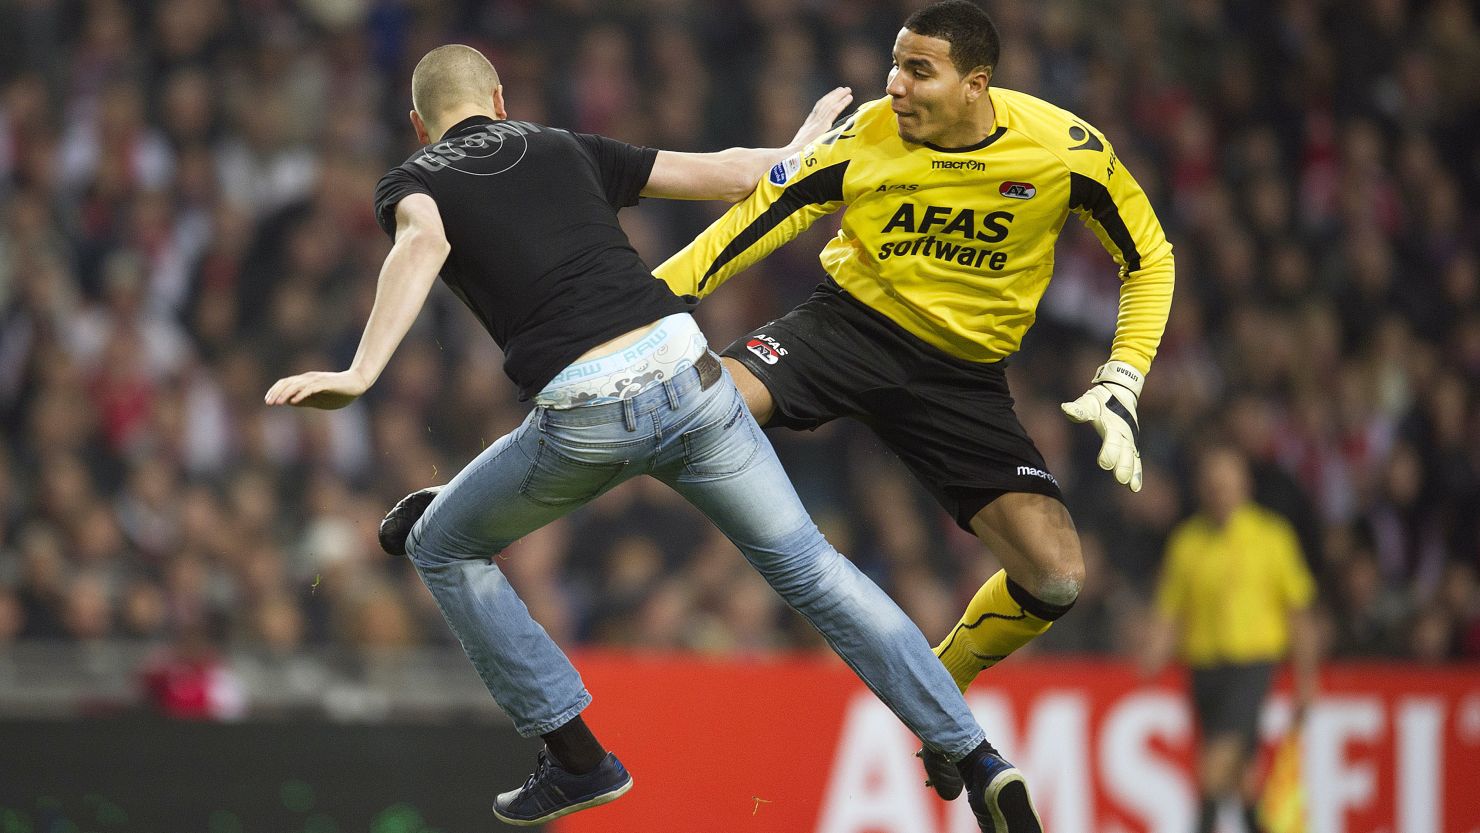 AZ Alkmaar goalkeeper Esteban kicks a man who attacked him from behind during the Dutch Cup match at Ajax.